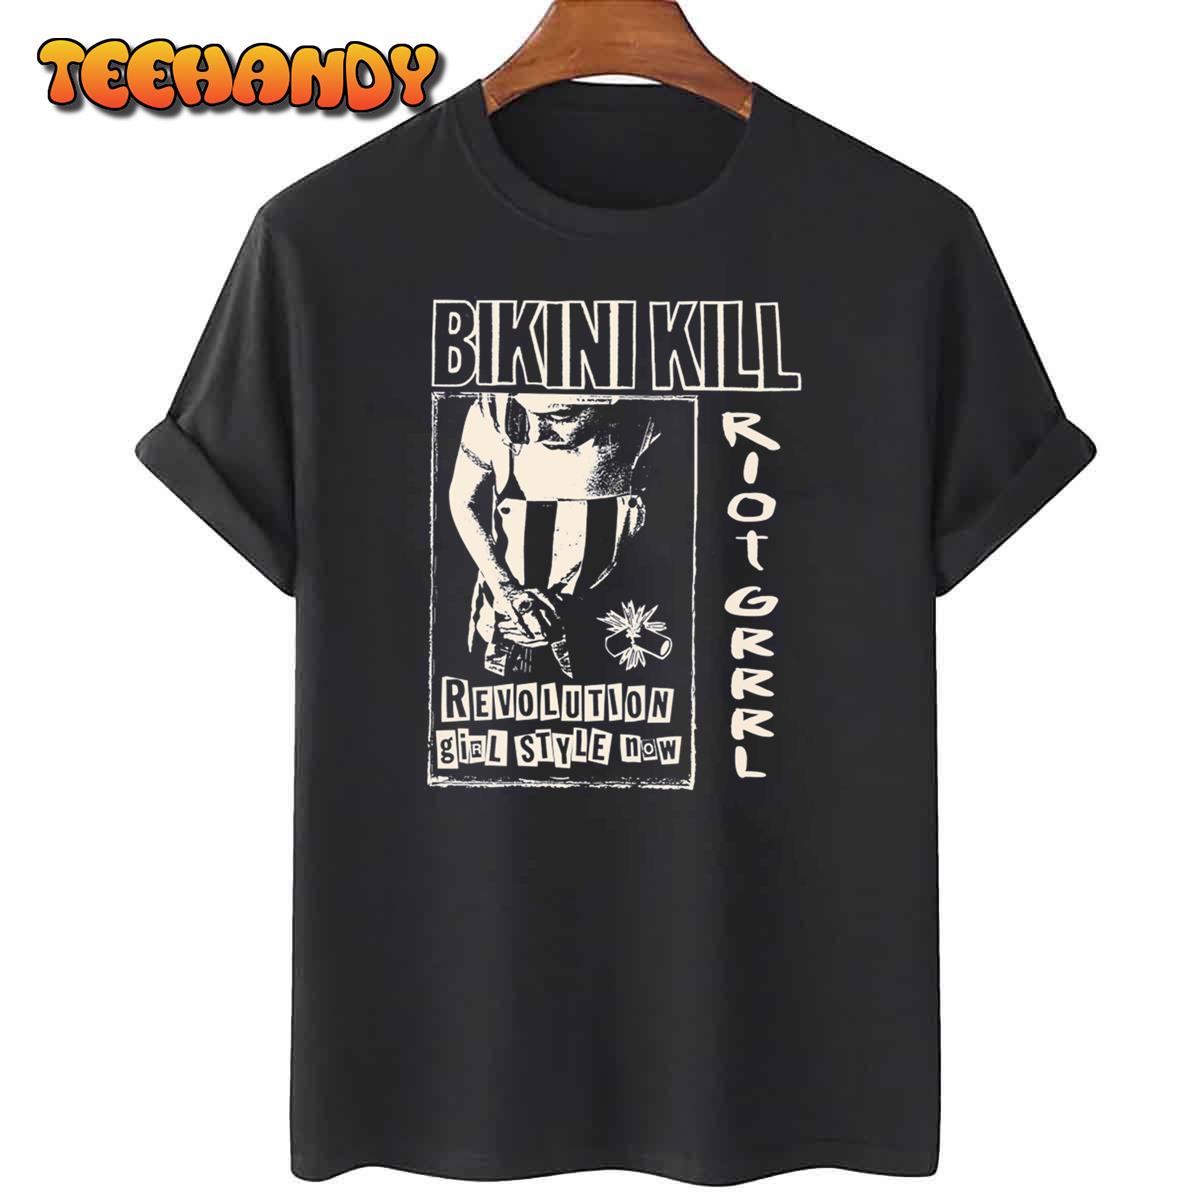 kaptajn automatisk cirkulation Bikini Kill Punk Rock 80s Music Vintage Unisex T Shirt